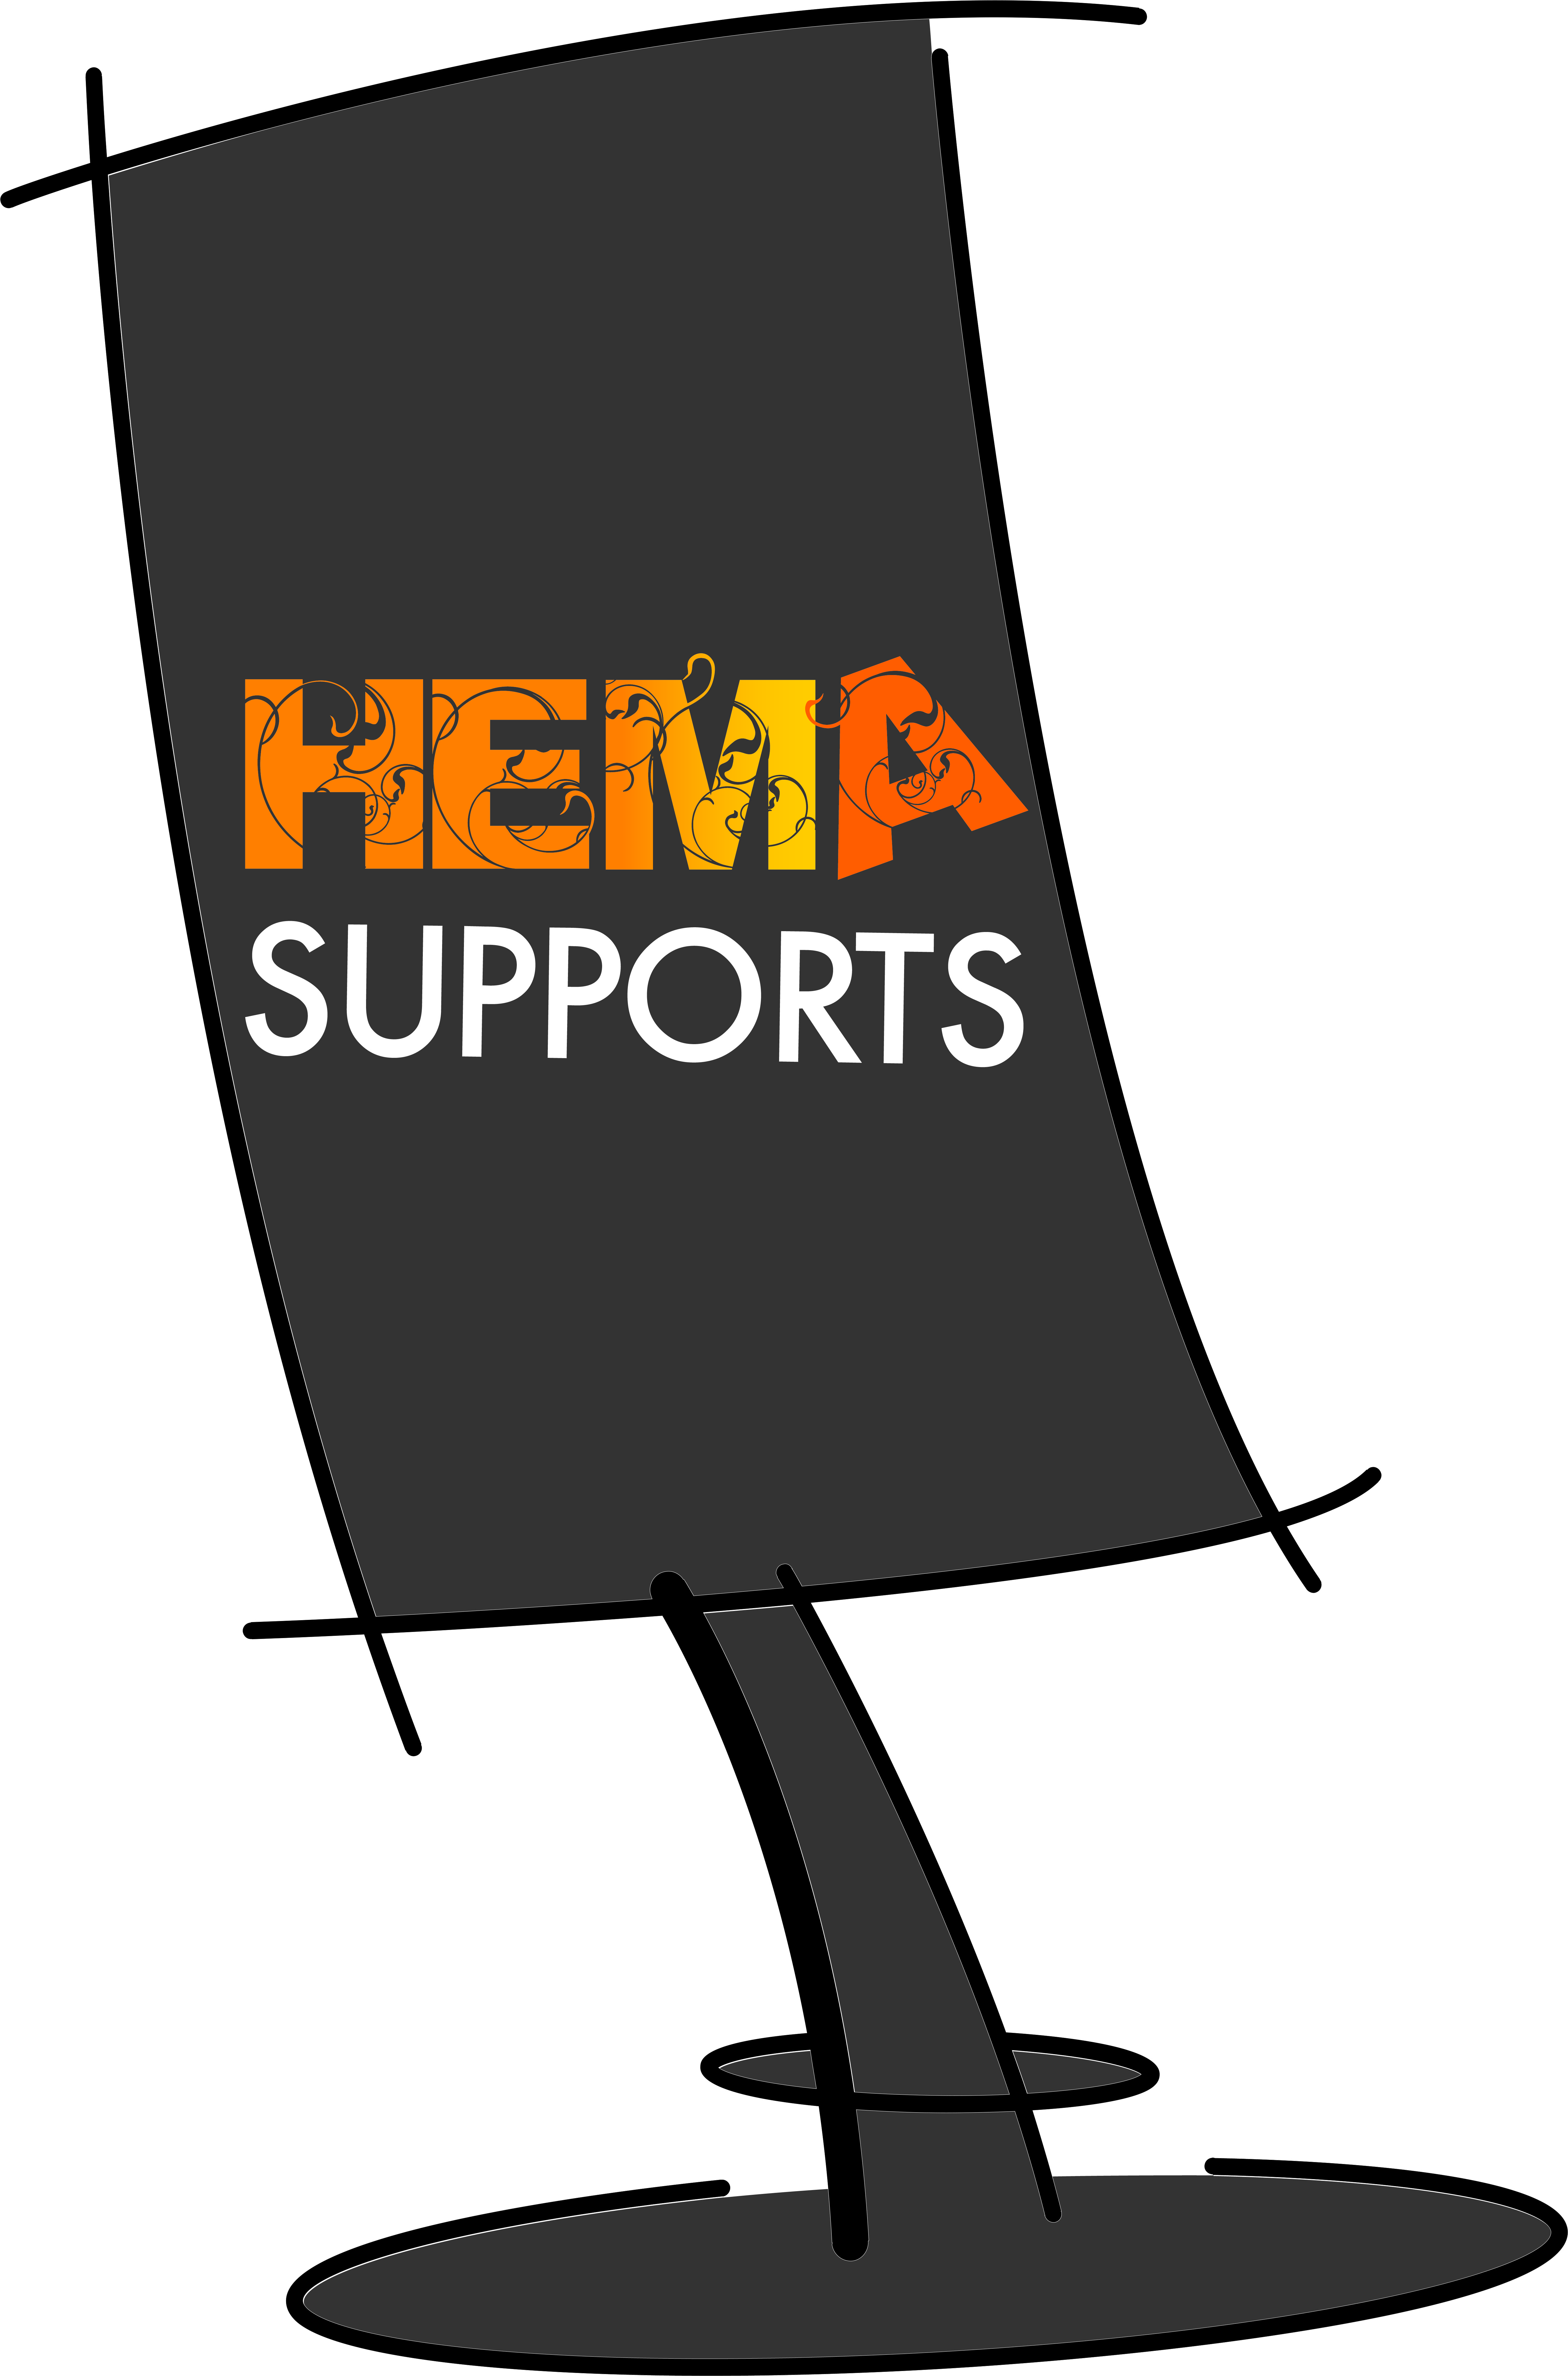 HEMA SUPPORTS